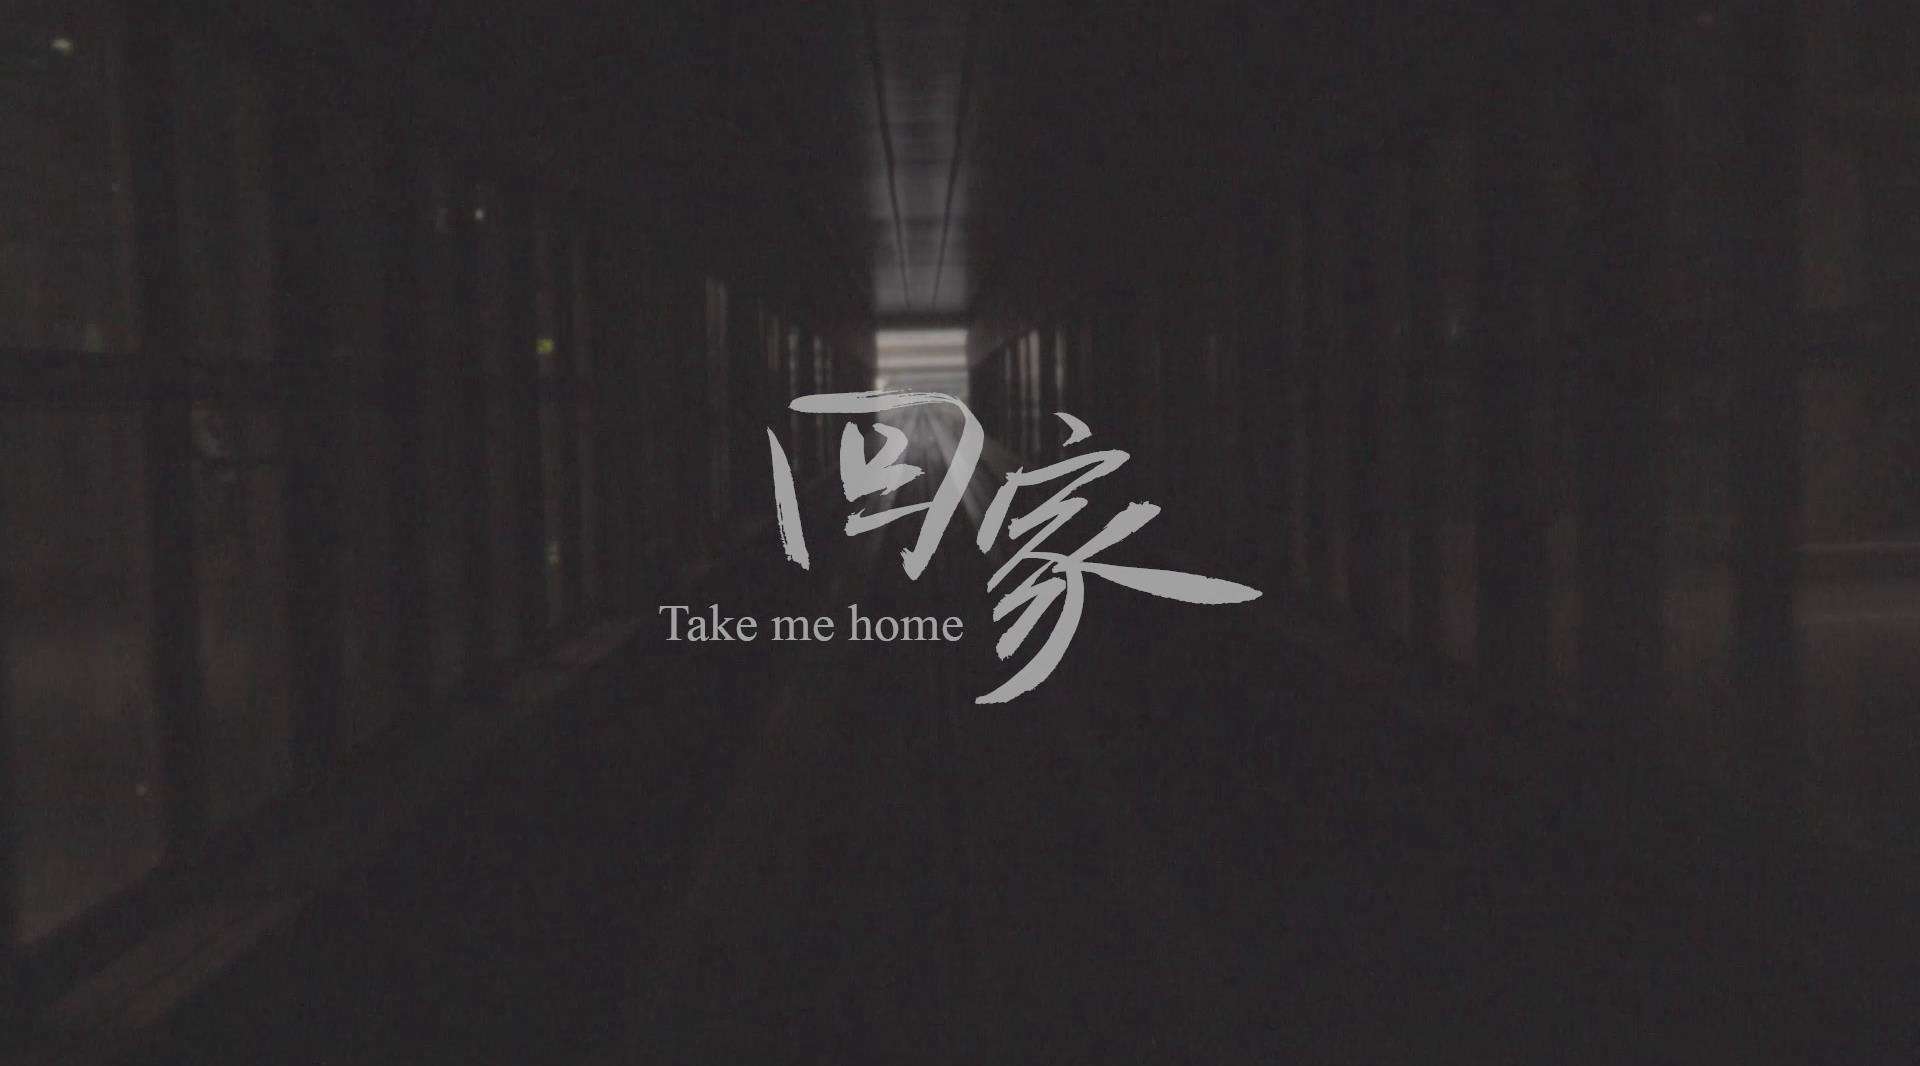 人民日报微纪录片《Take me home》